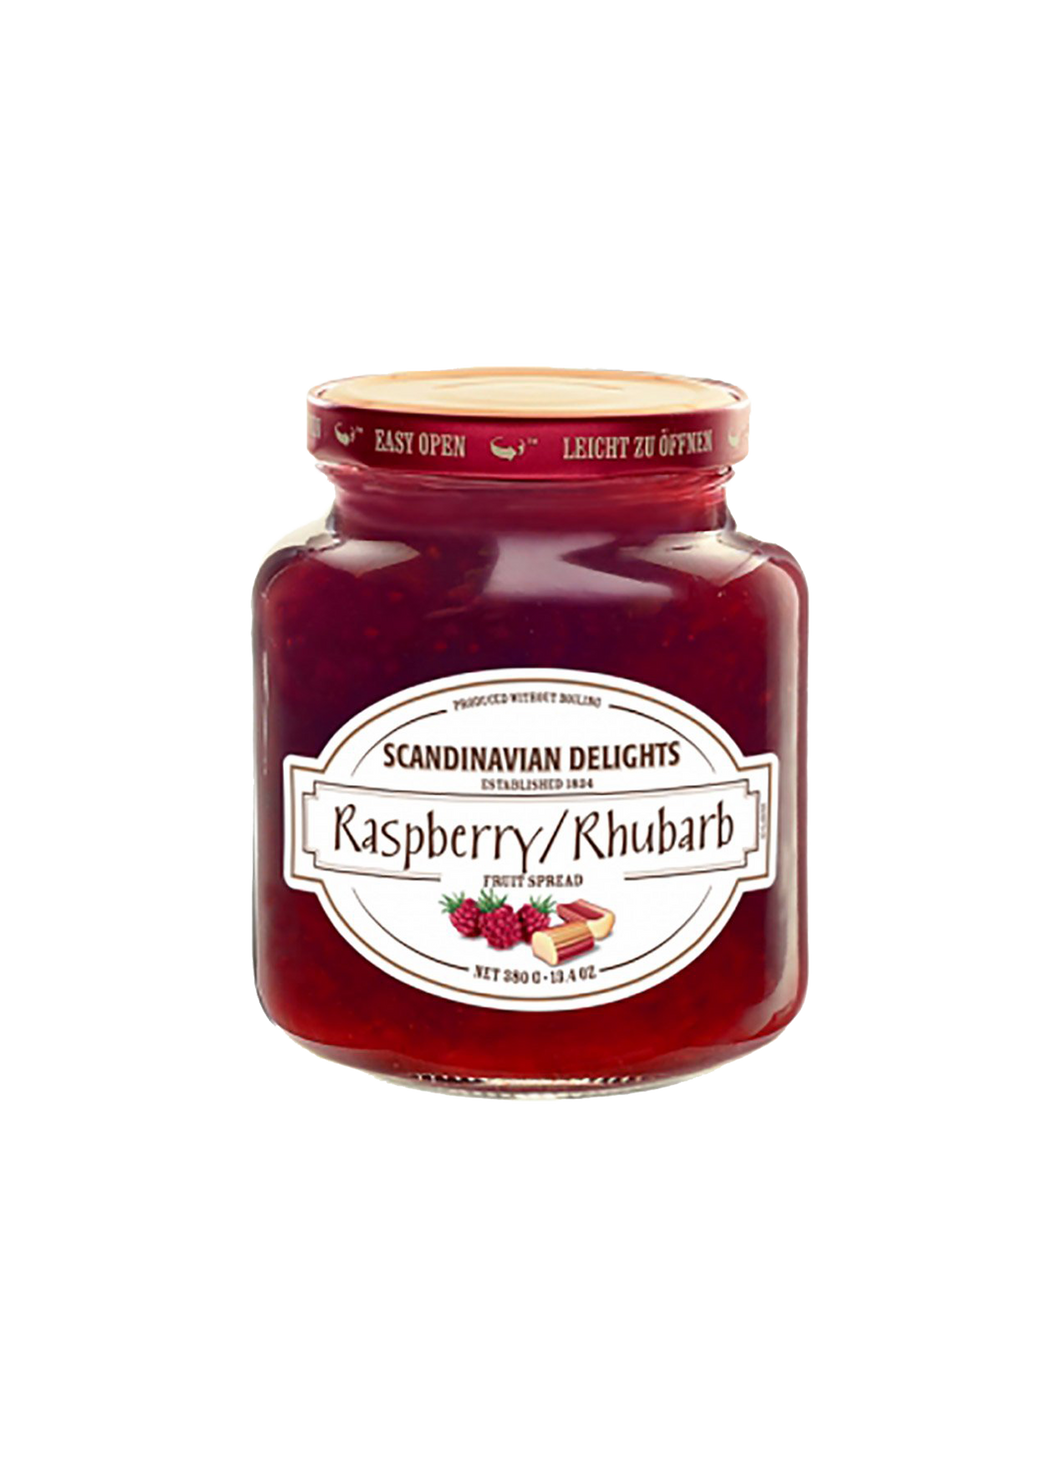 Scandinavian Delights Raspberry/Rhubarb 380g